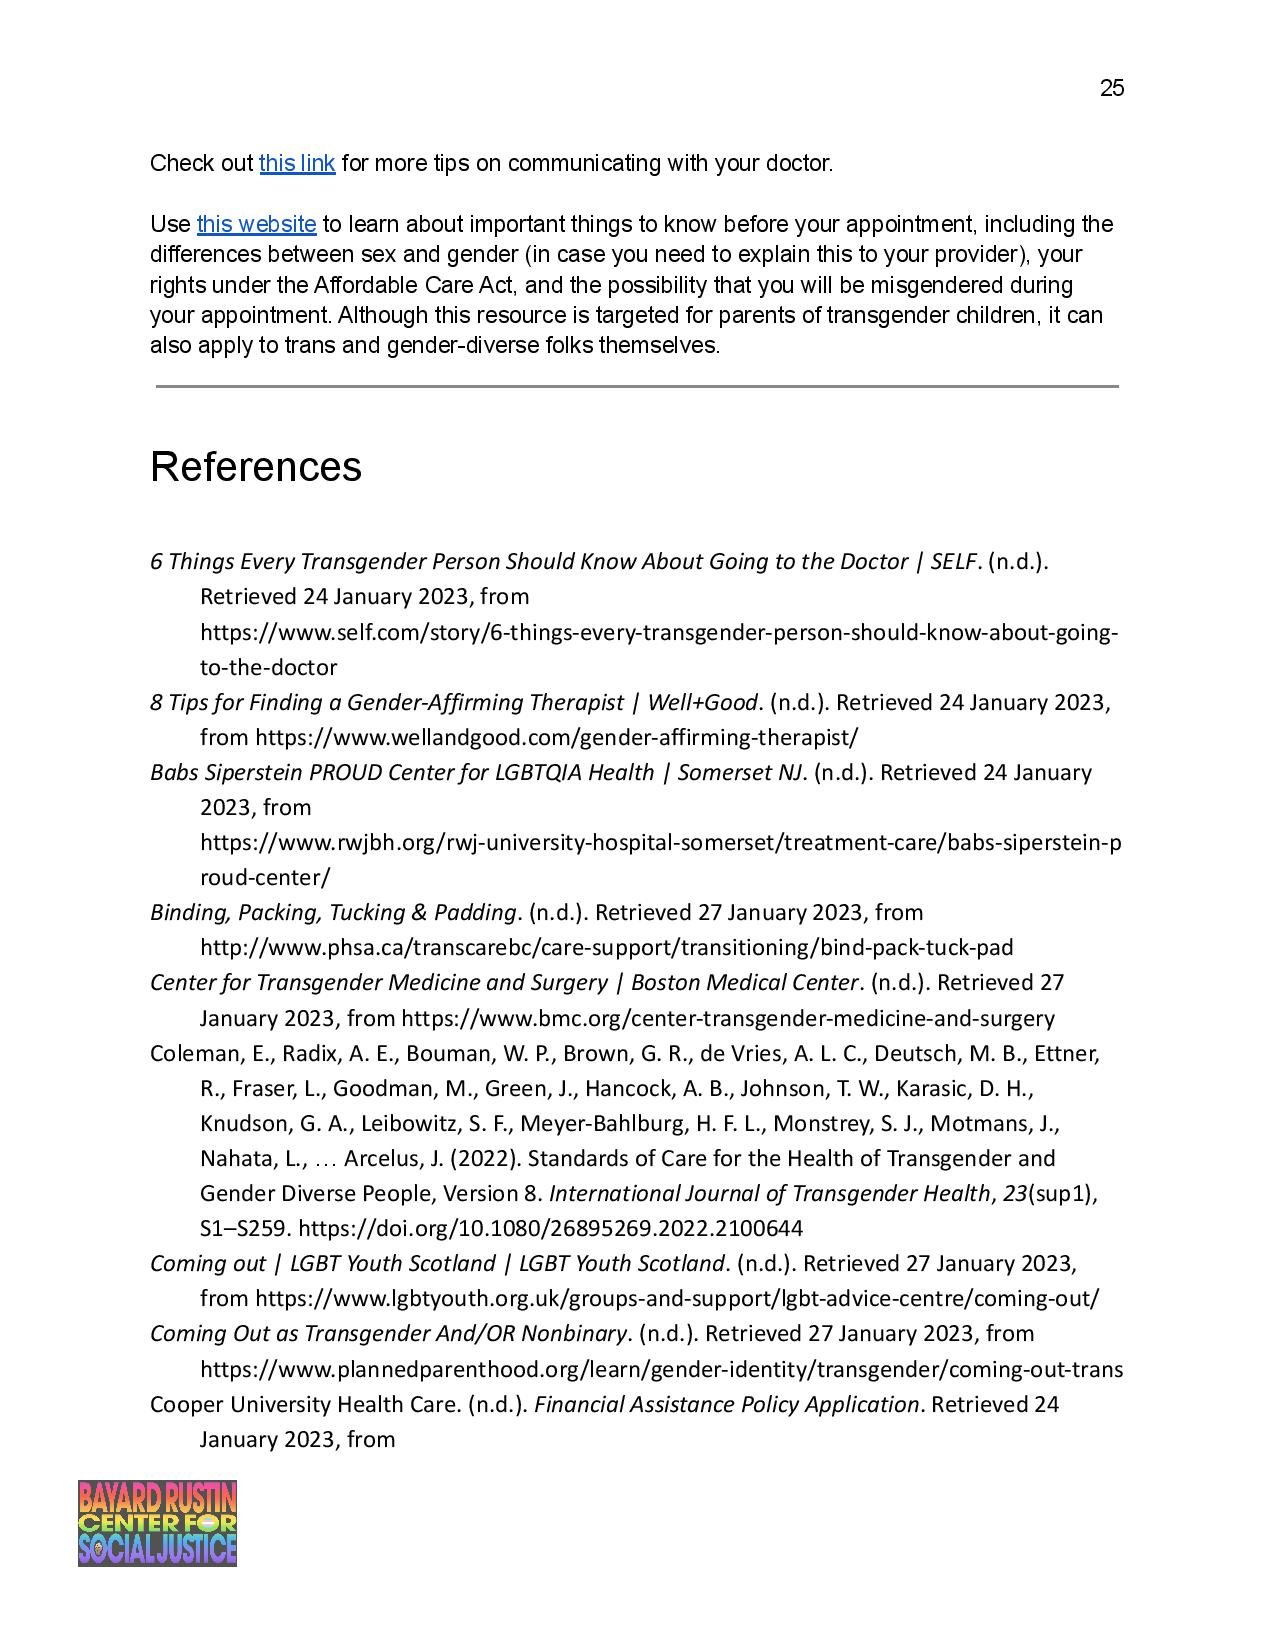 BRCSJ Trans Healthcare Full Roadmap (2023)-page-026.jpg